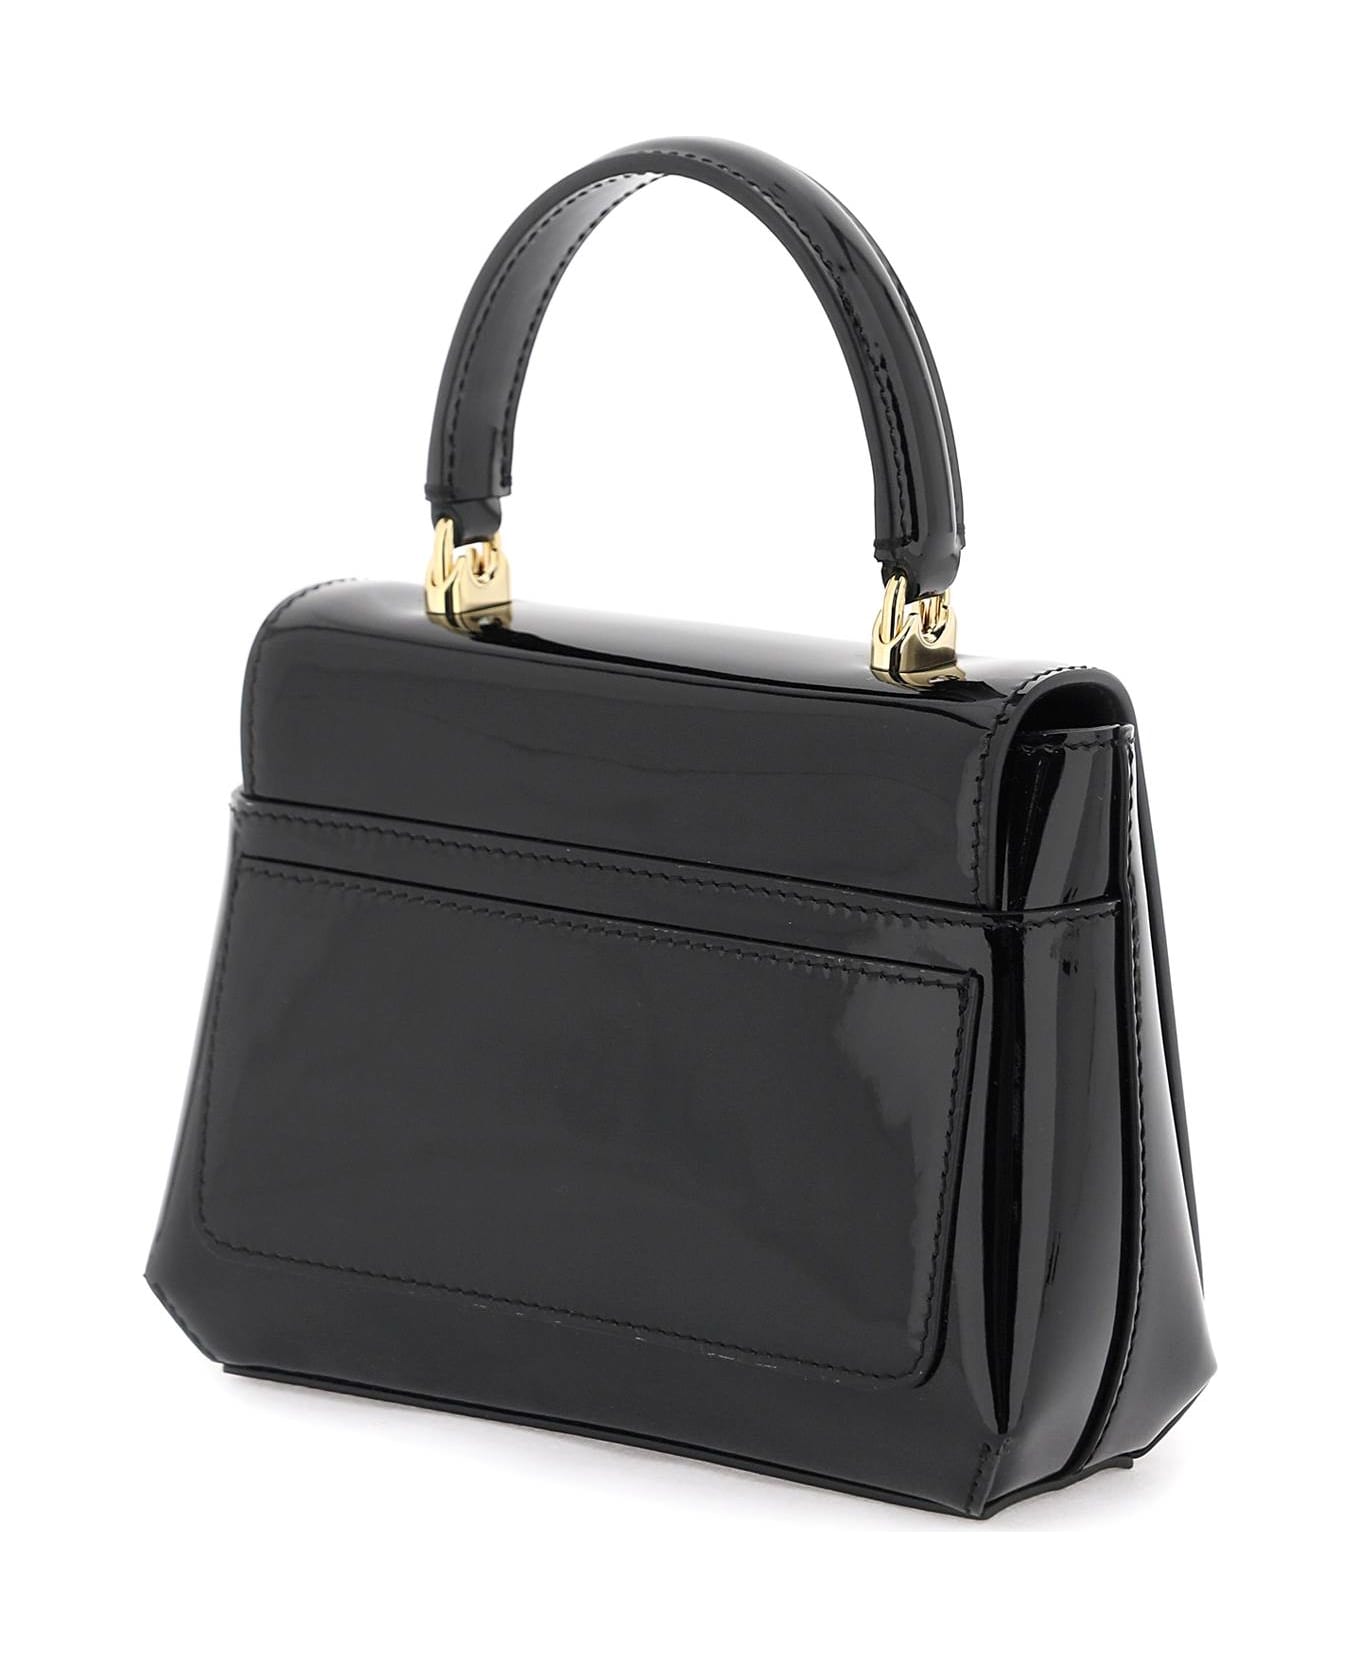 Dolce & Gabbana 'dg' Patent Leather Handbag - Black